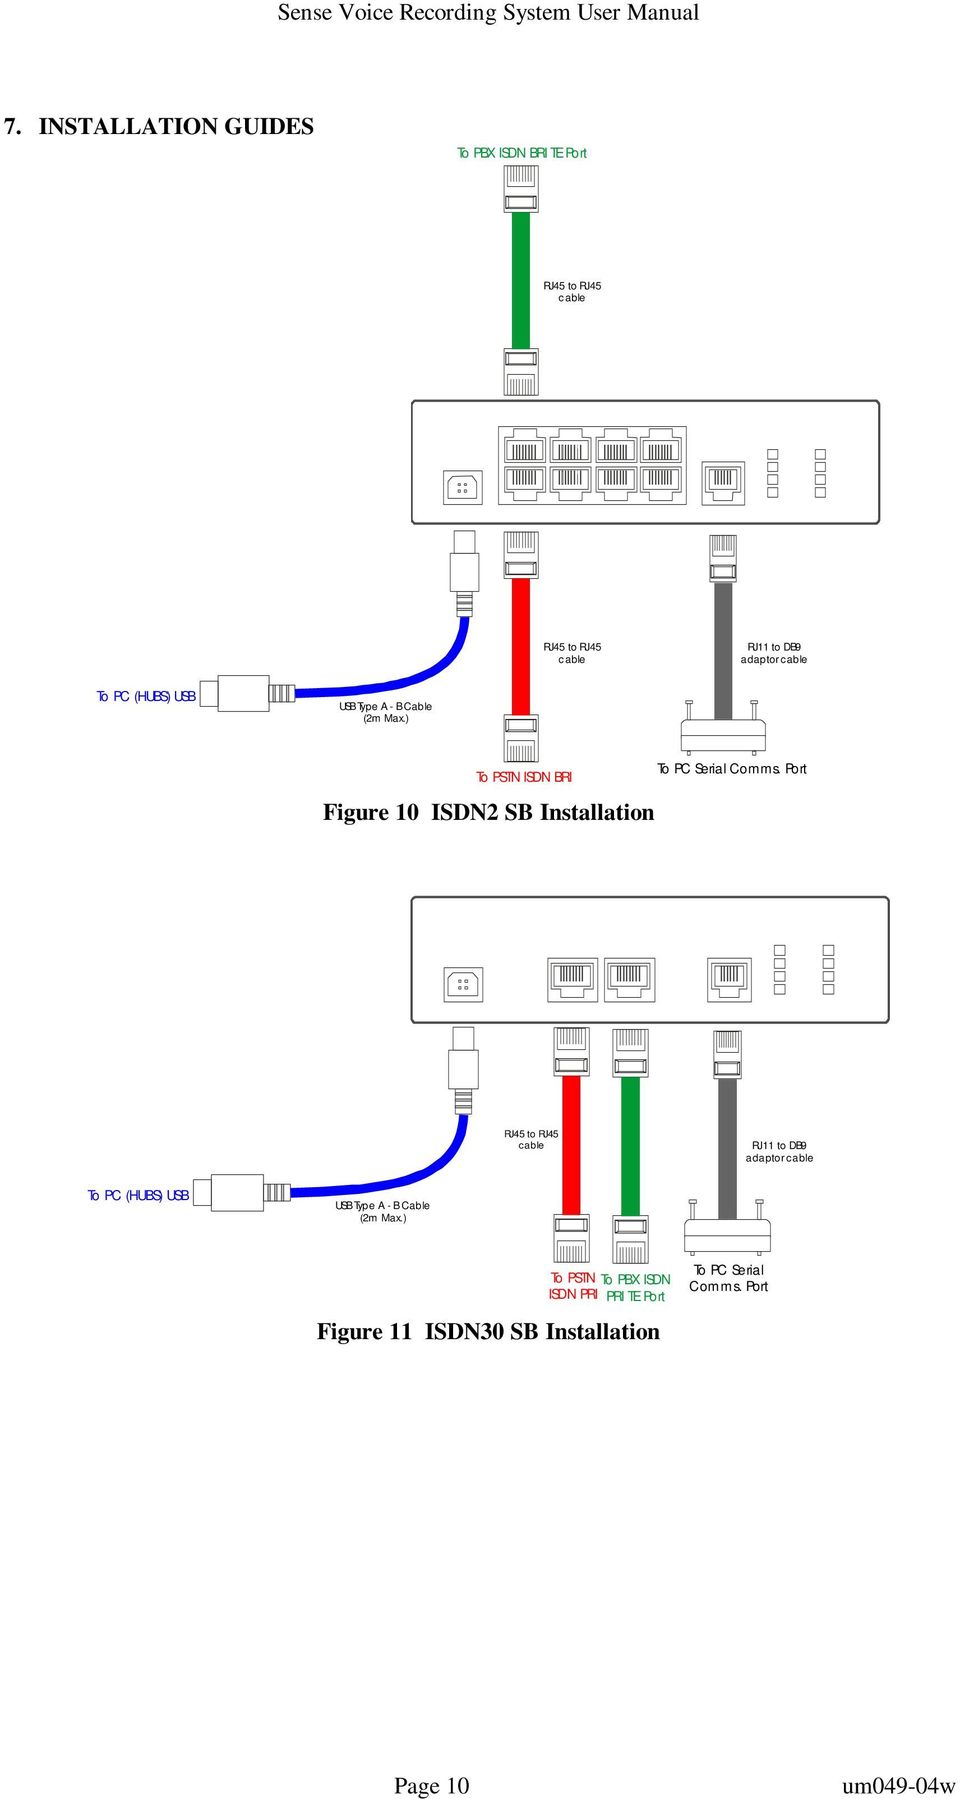 ) To PSTN ISDN BRI Figure 10 ISDN2 SB Installation To PC Serial Comms.